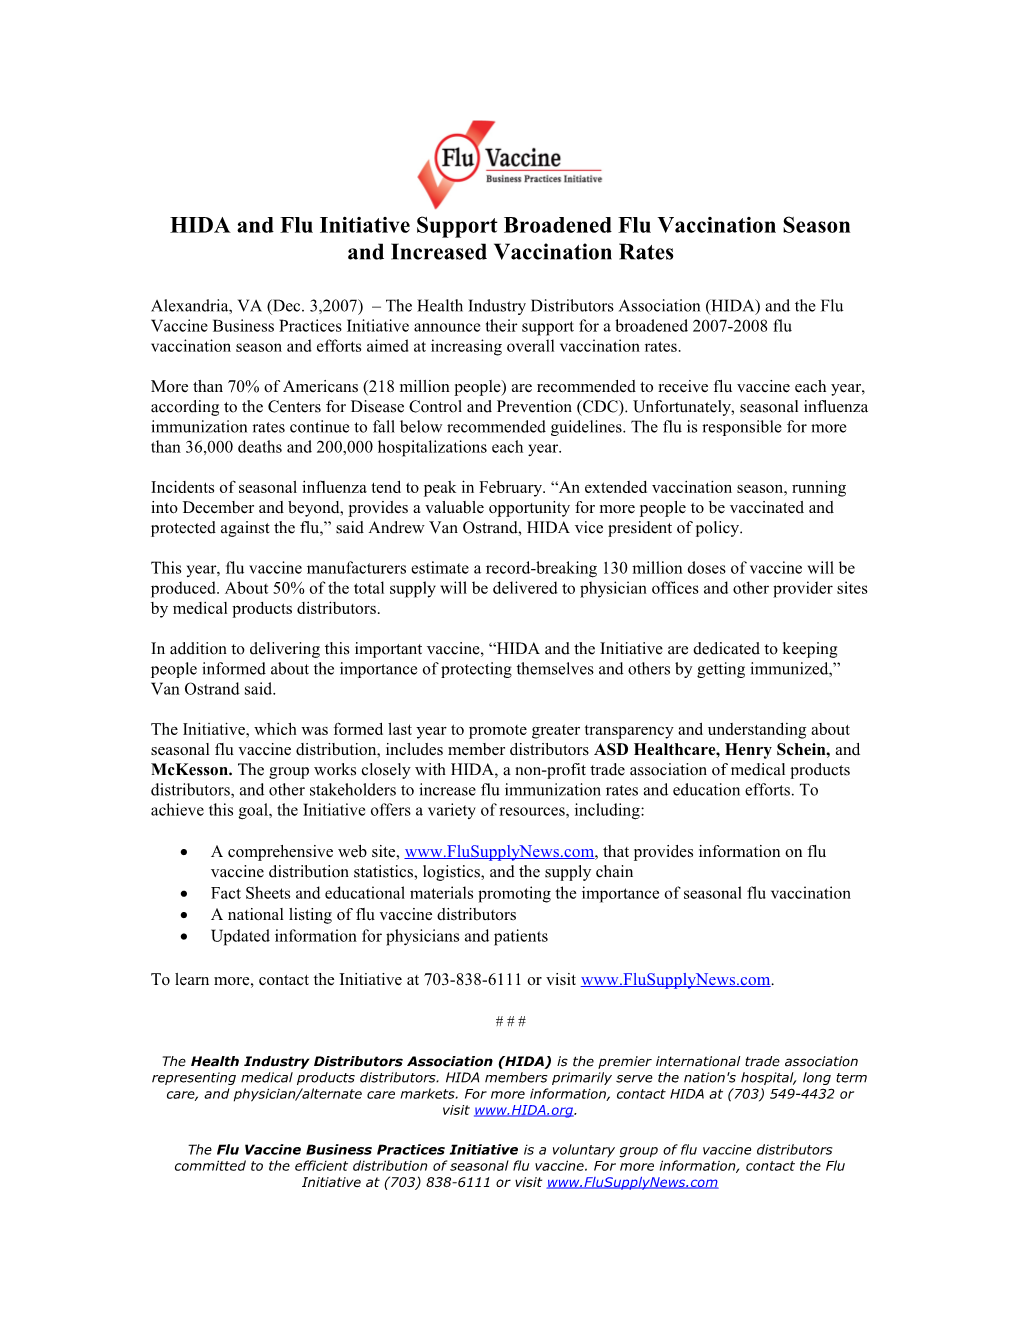 HIDA and Flu Initiative Support Broadened Flu Vaccination Season and Increased Vaccination